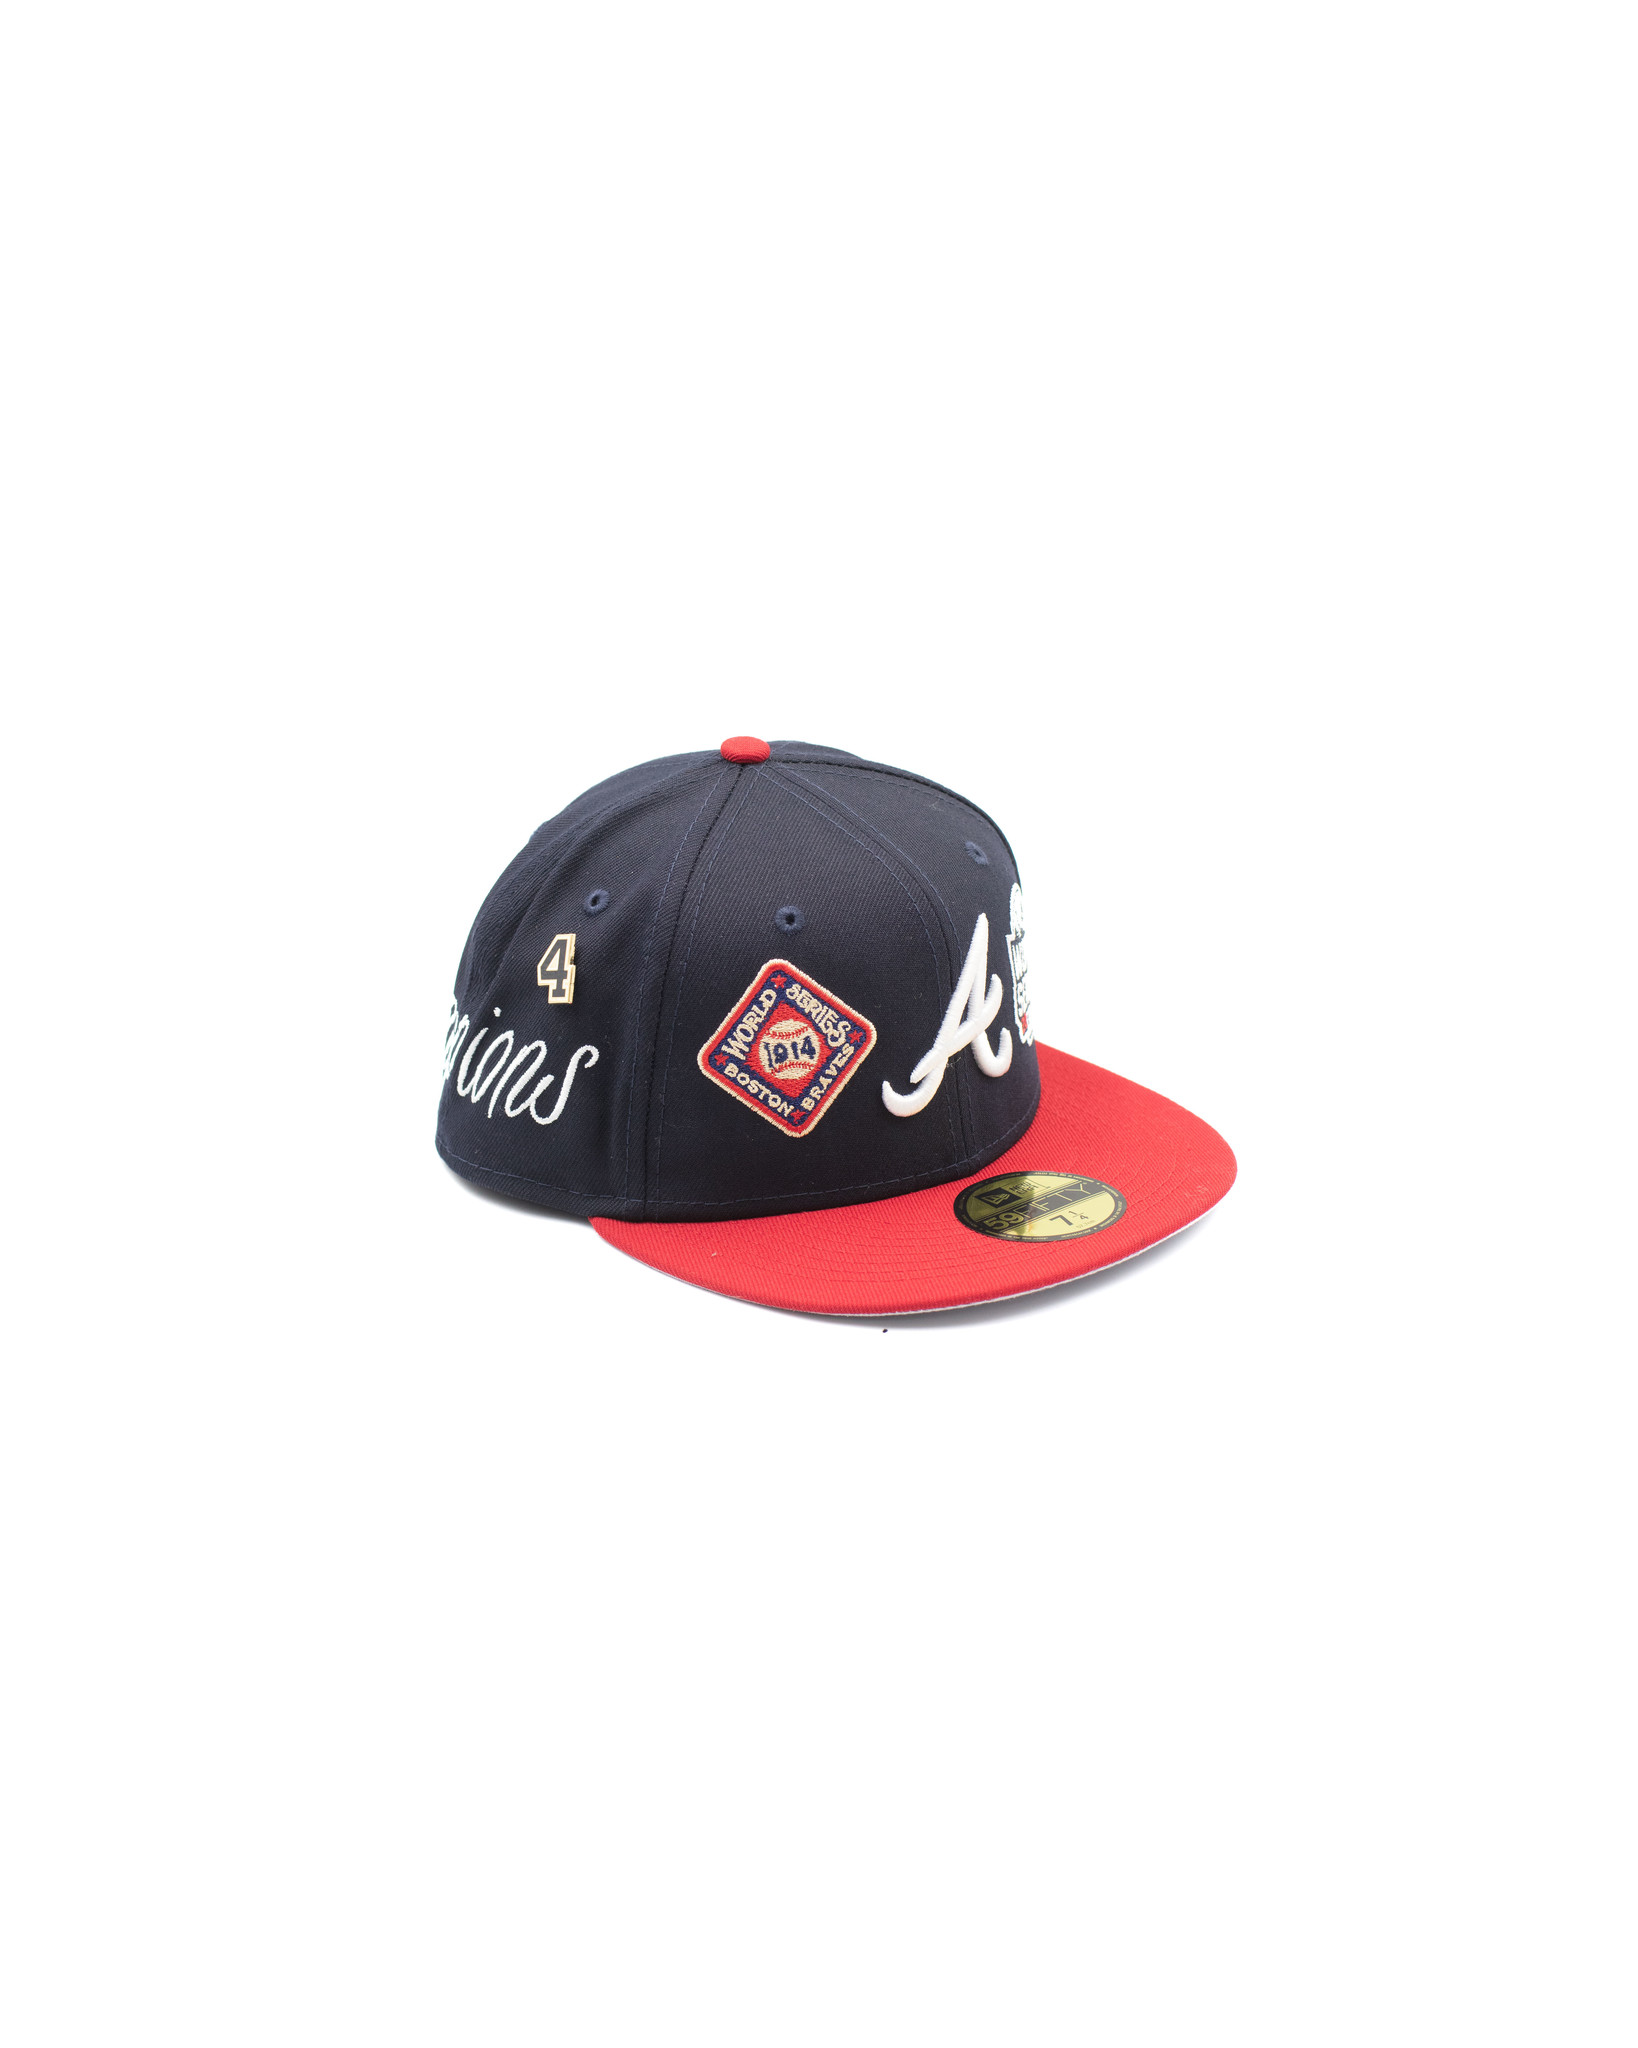 New Era 59FIFTY Atlanta Braves 2021 World Series Patch Hat - Red, Black Red/Black / 7 3/8